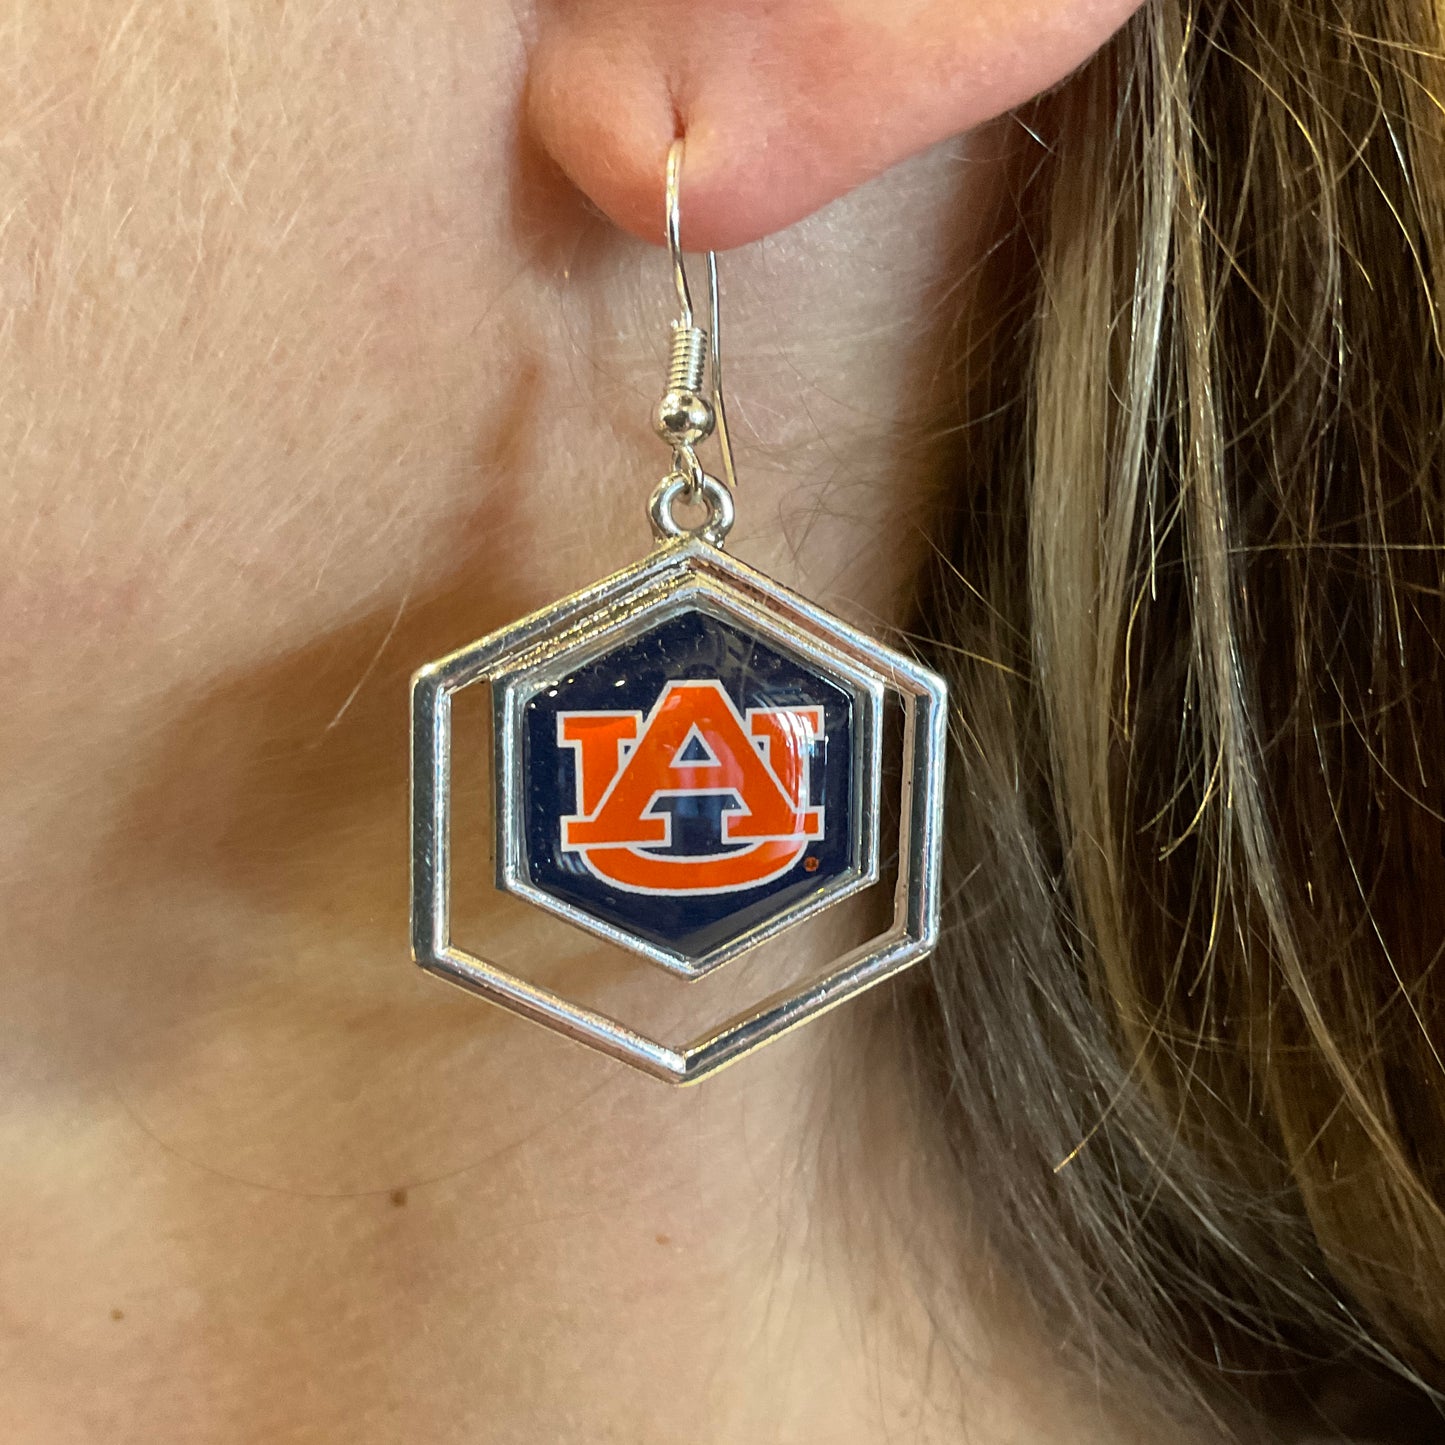 From The Heart Auburn Hexagon Earrings